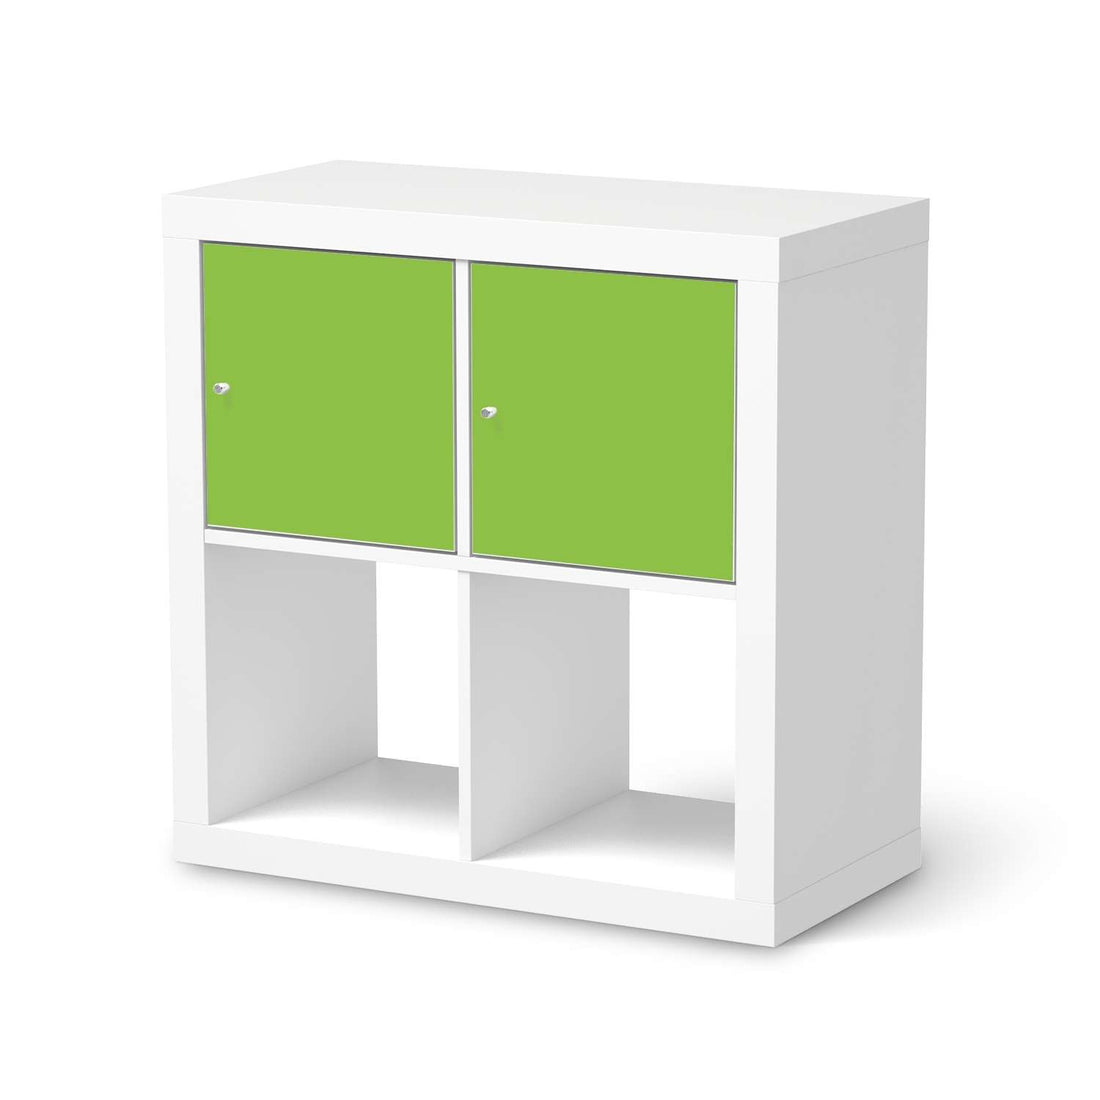 Möbel Klebefolie Hellgrün Dark - IKEA Expedit Regal 2 Türen Quer  - weiss